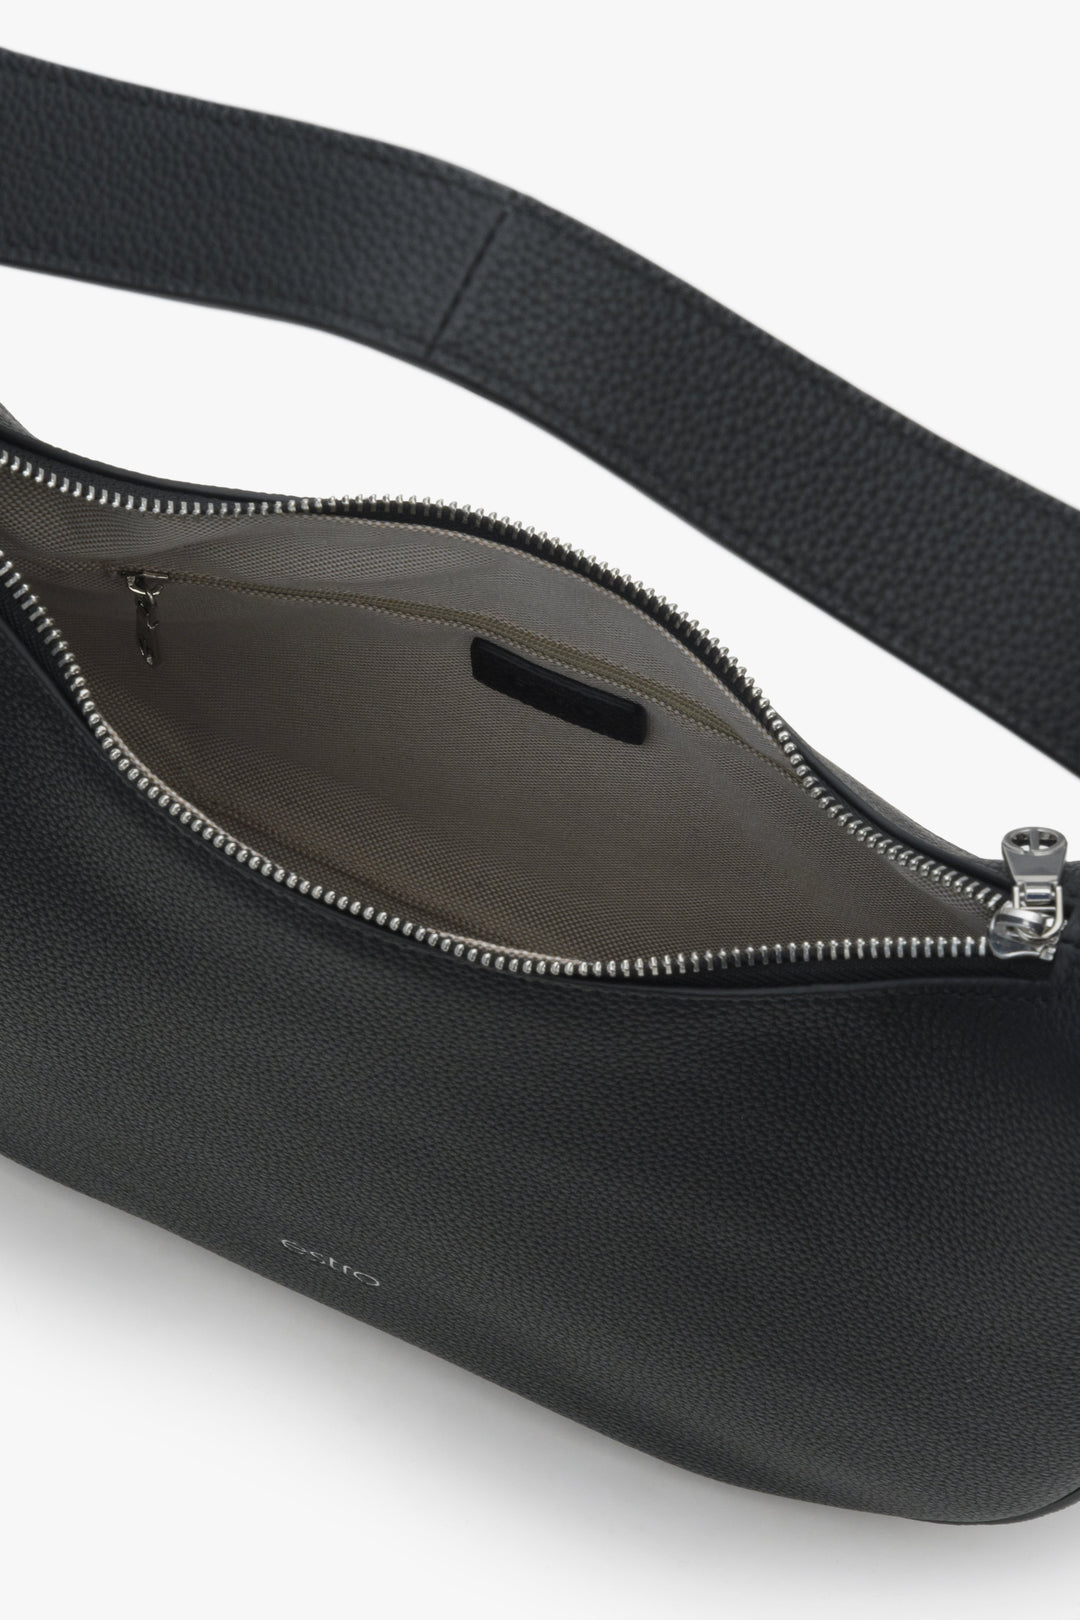 Women's black crescent-shaped Estro handbag - close-up on the details.